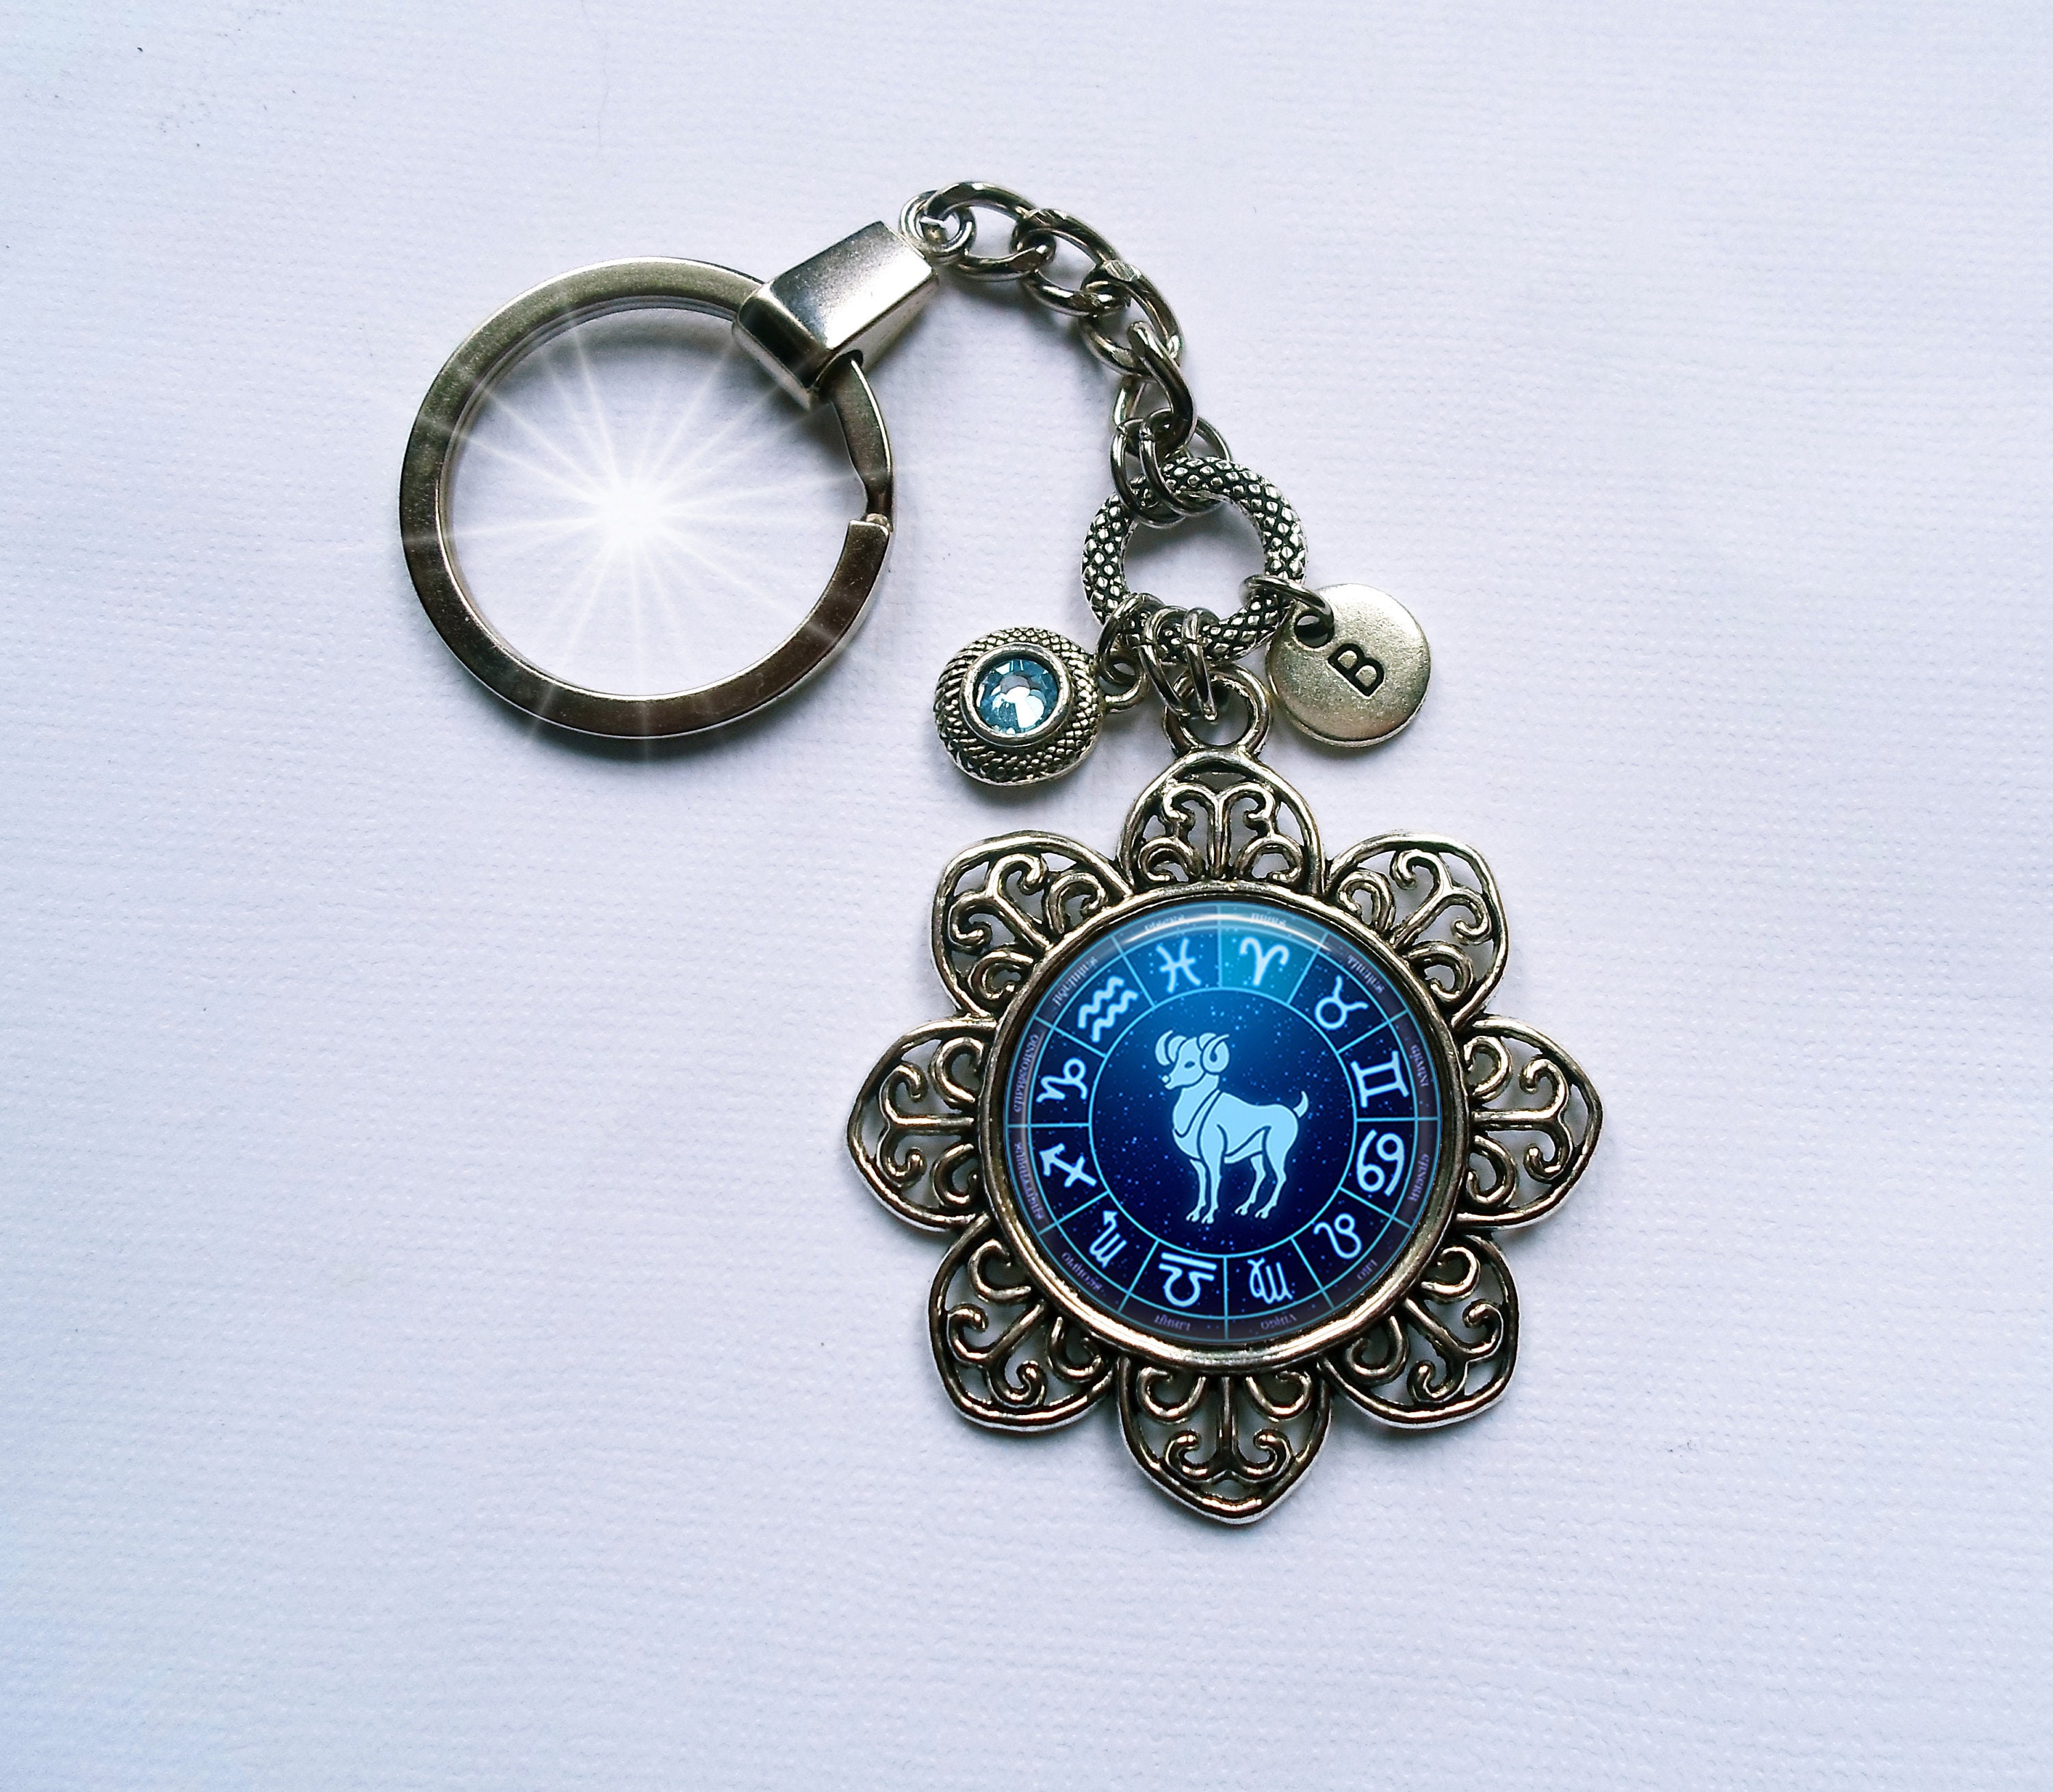 Aries The Ram Keychain Or Zipper Pull With Swarovski Birthstone Crystal & Letter Charm, Zodiac Gift, March 20 - April Birthday